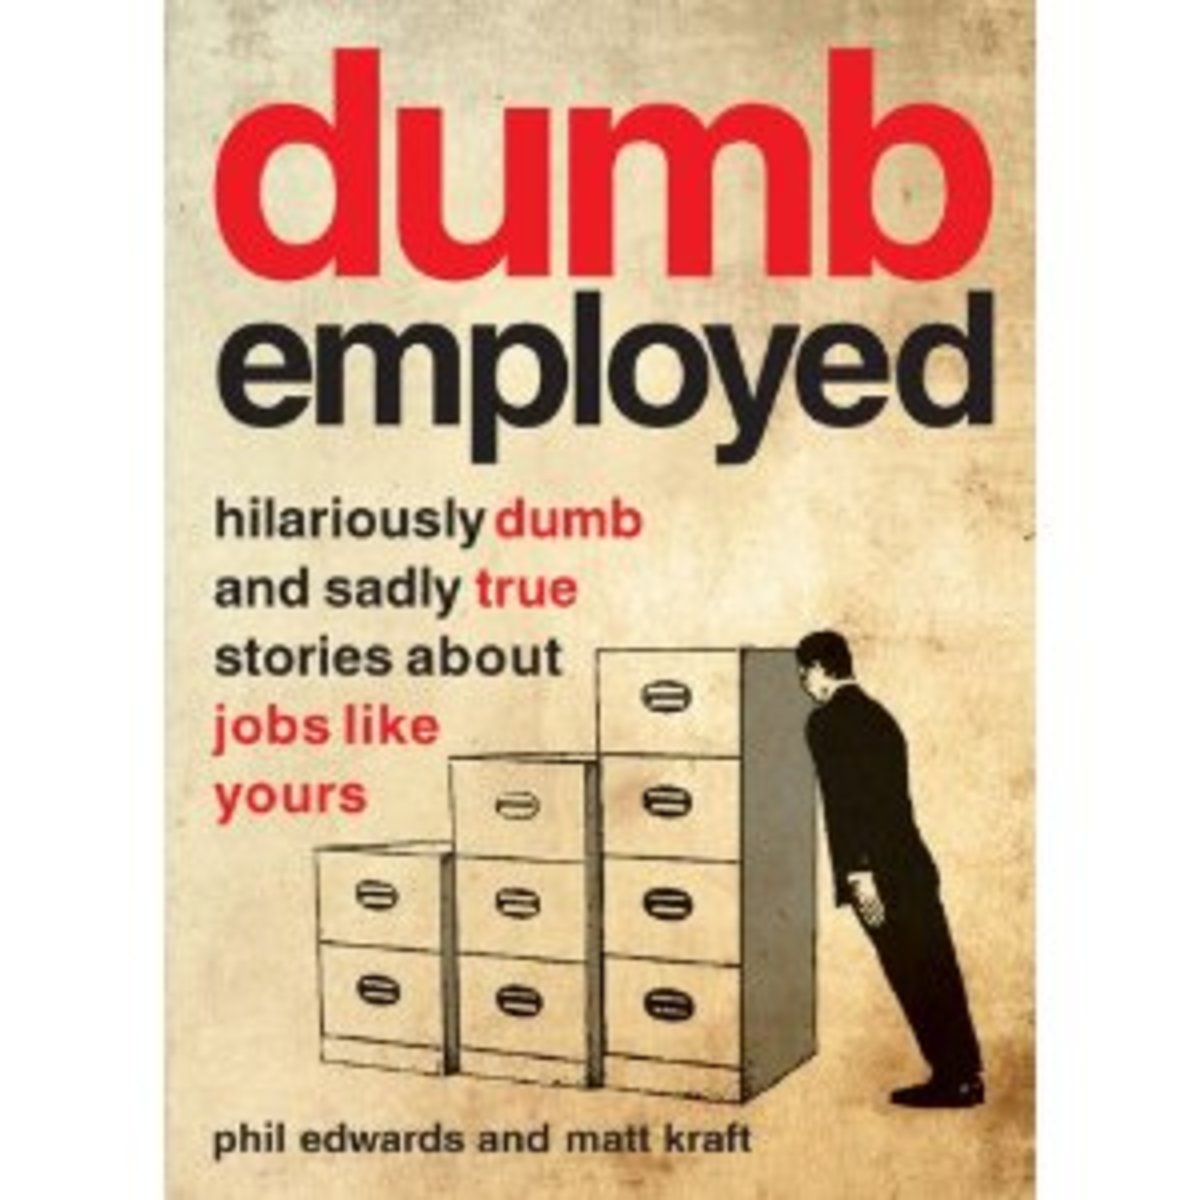 Dumpemployed by Phil Edwards and Matt Kraft